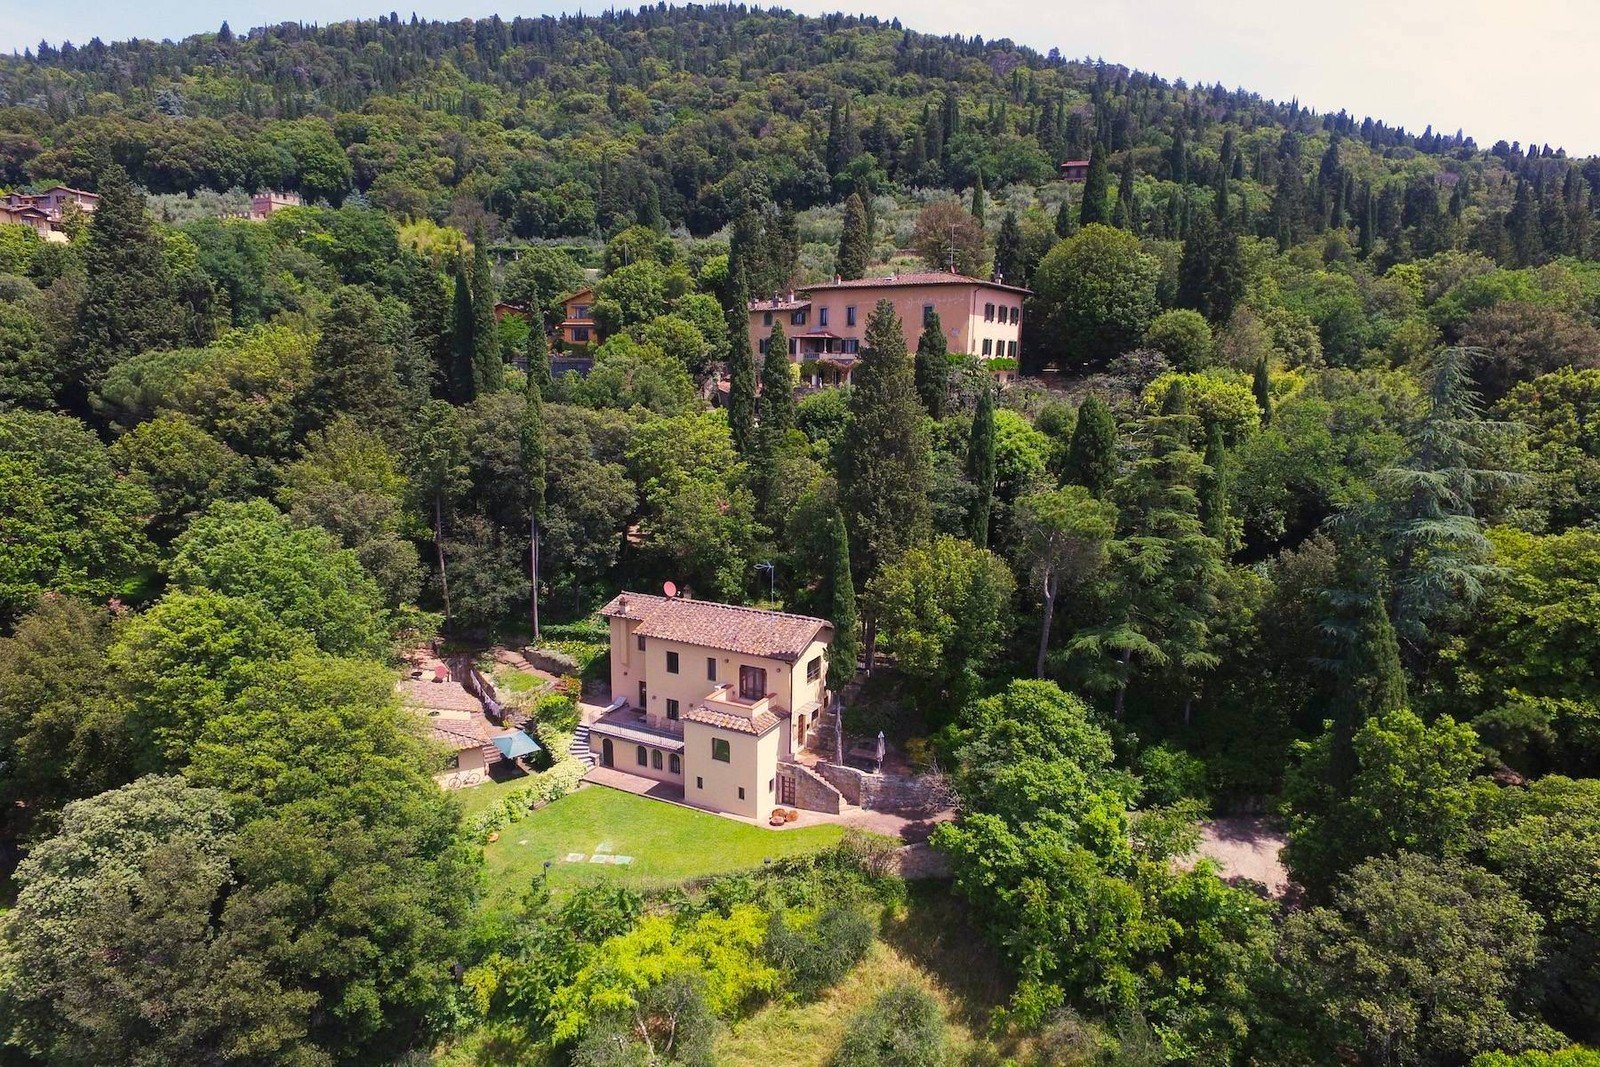 Francis York Italian Villa Set in the Tuscan Hills Overlooking Florence, Italy 00039.jpeg